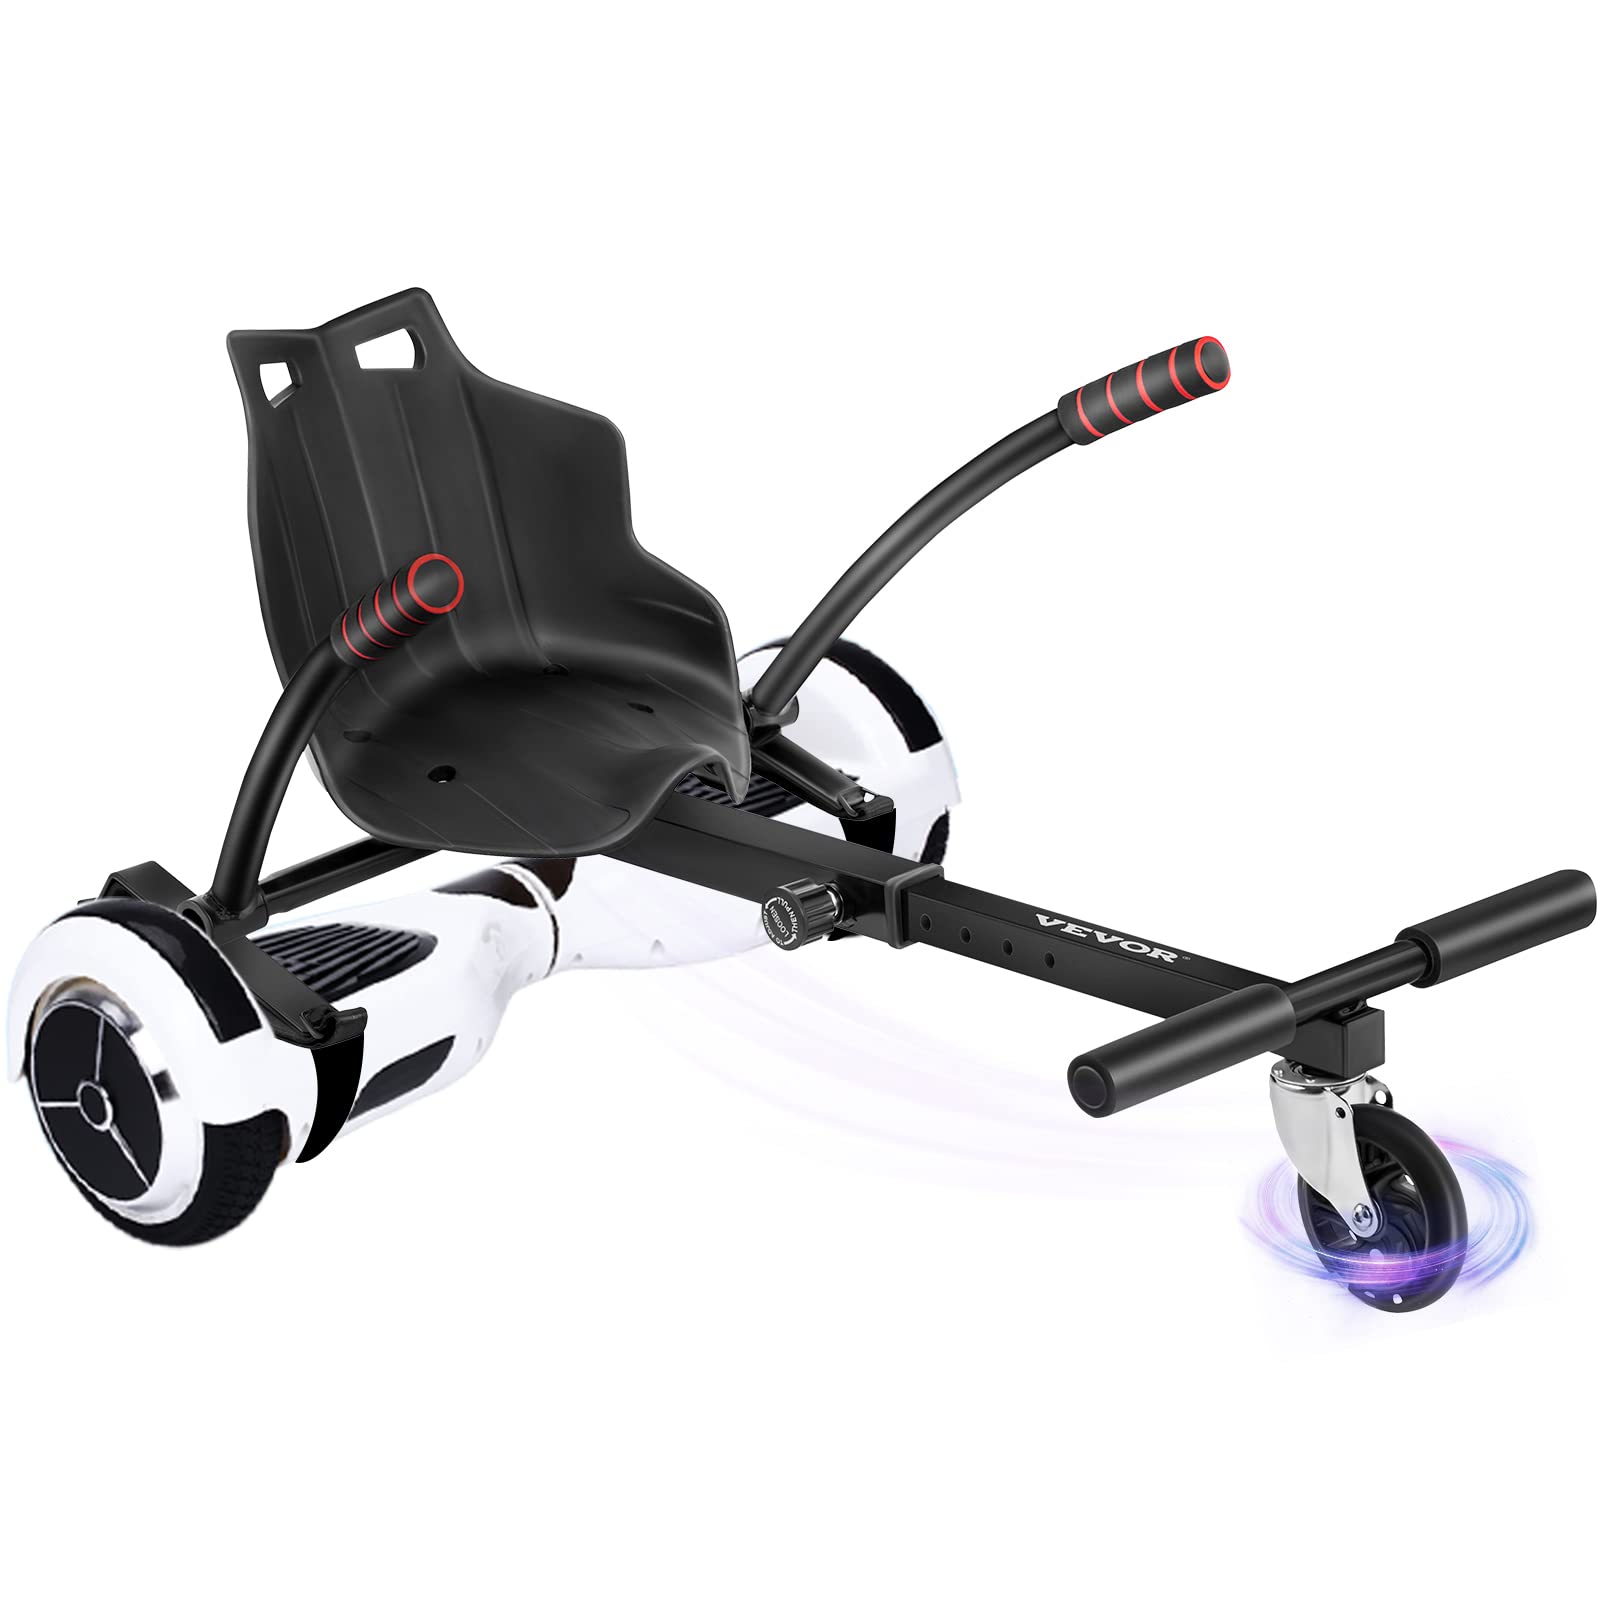 VEVOR Hoverboard Go Kart Seat Attachment for 6.5" 8" 10" Self Balancing Scooter, Hoverboard Kart for Kids or Adults, Black Hoverboard Attachments Adjustable Frame Length - image 1 of 10